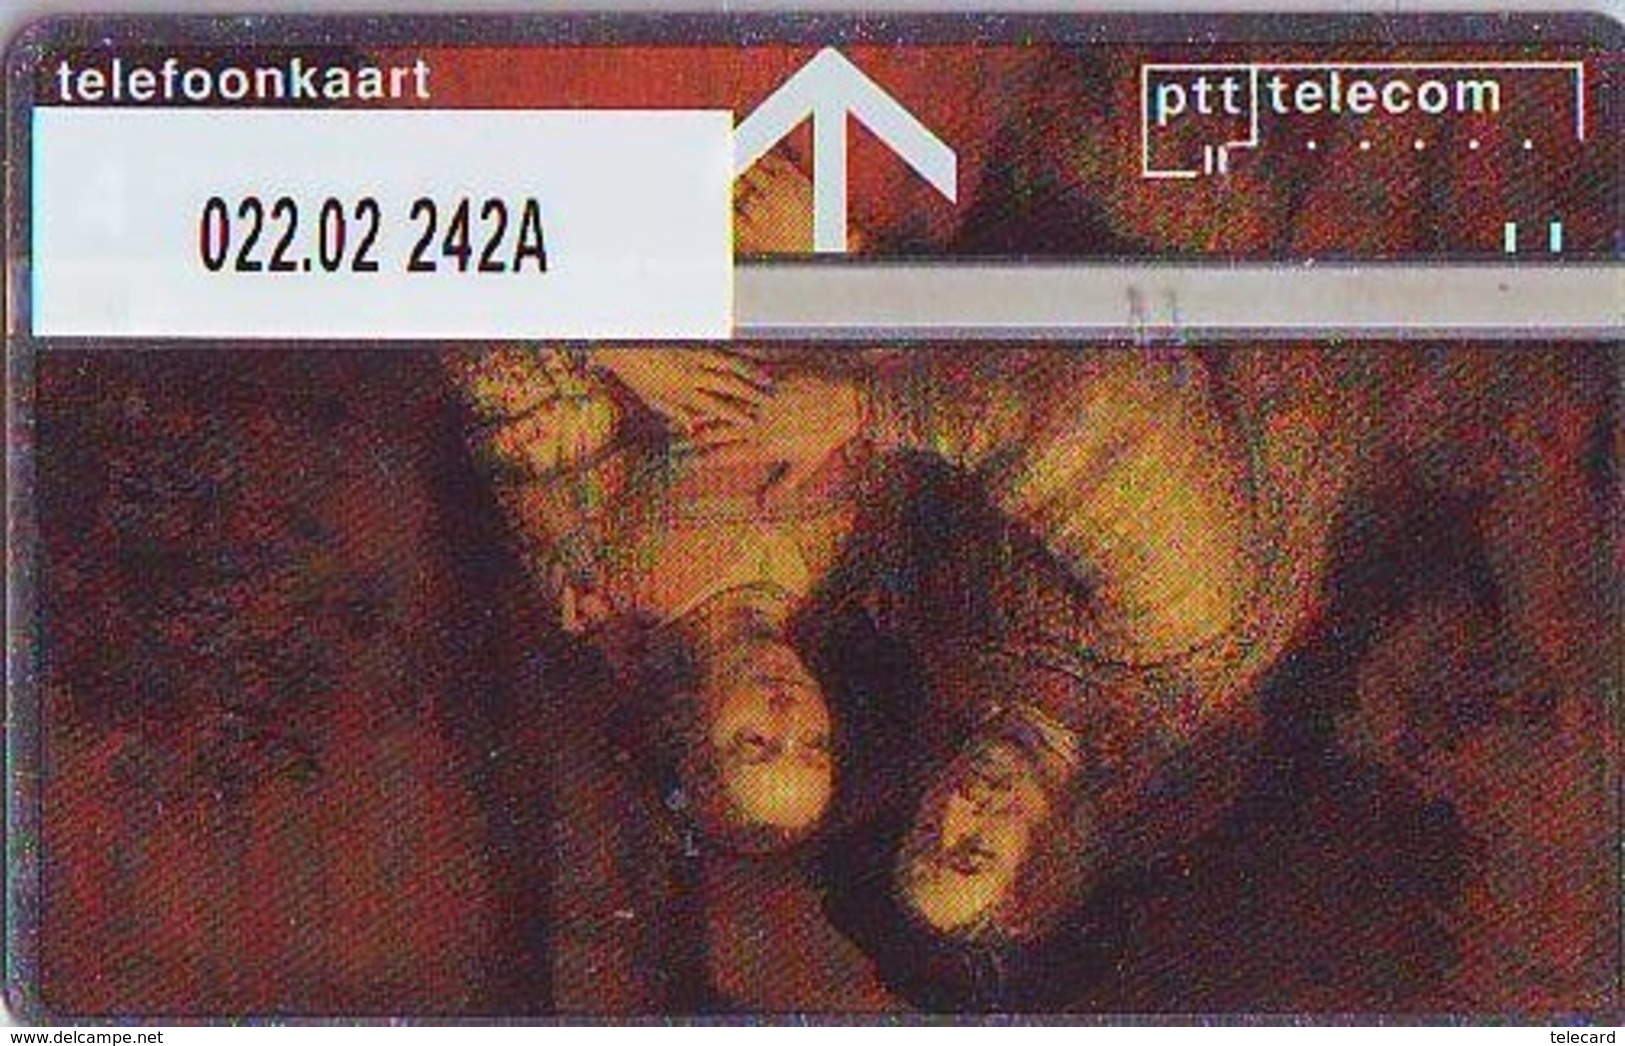 Telefoonkaart * LANDIS&GYR * NEDERLAND *  REMBRANDT SERIE R-022.01-03 * Niederlande Prive Private  ONGEBRUIKT * MINT - Privées